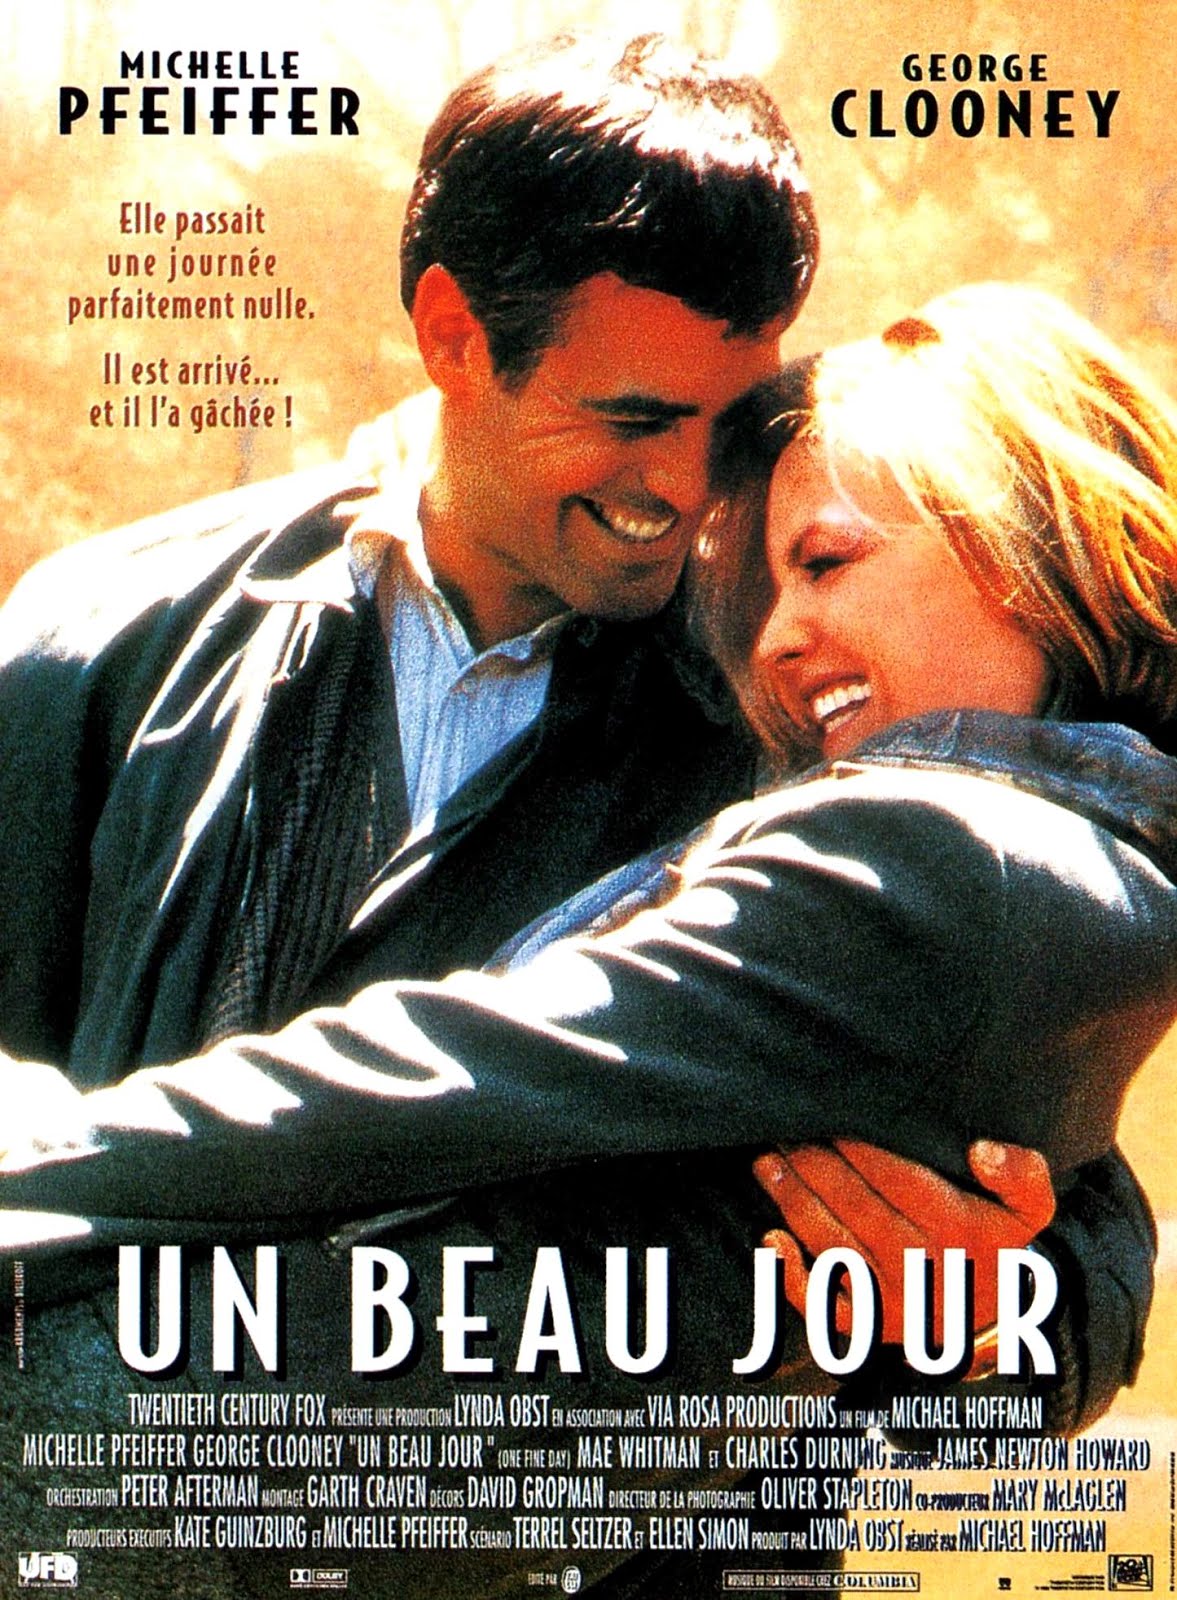 Un beau jour (1996) Michael Hoffman - One fine day (26.02.1996 / 18.05.1996)